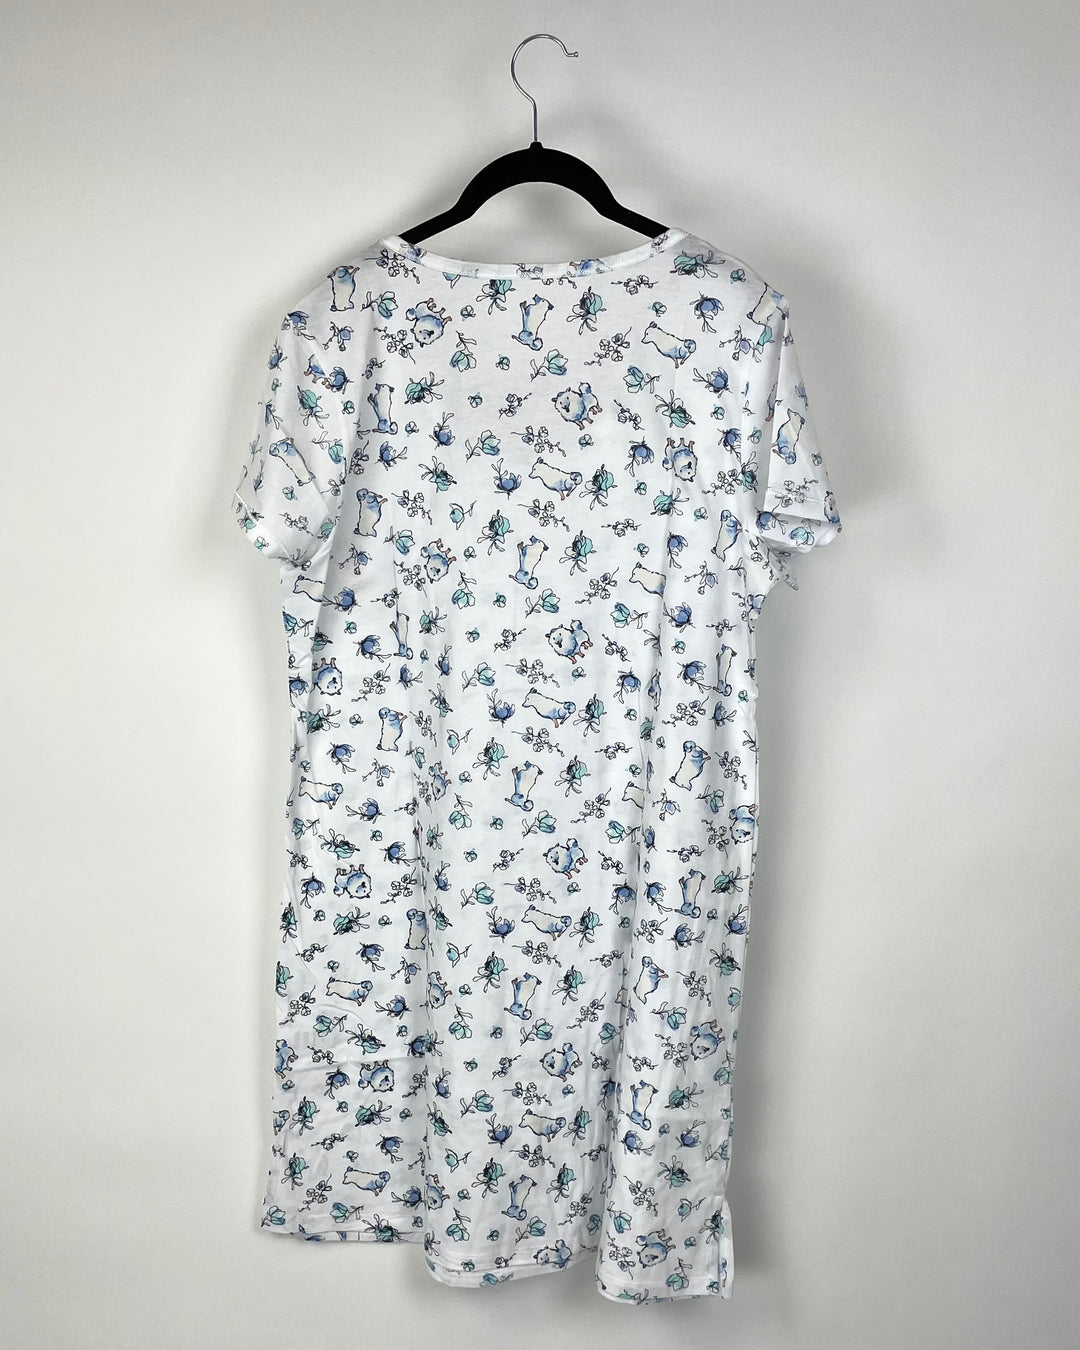 White And Blue Dog Print Nightgown - Medium